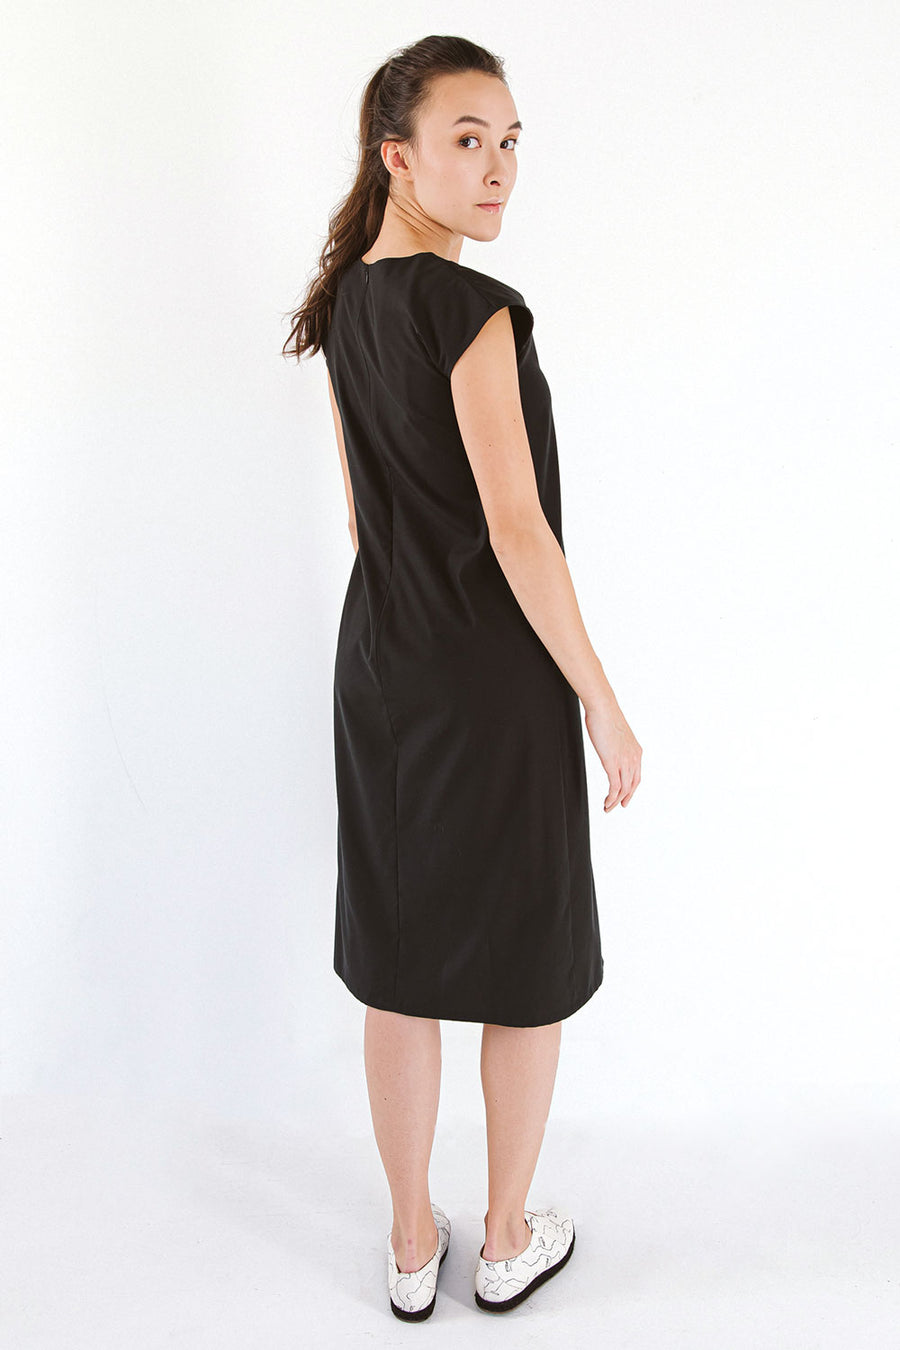 Sleeveless black dress